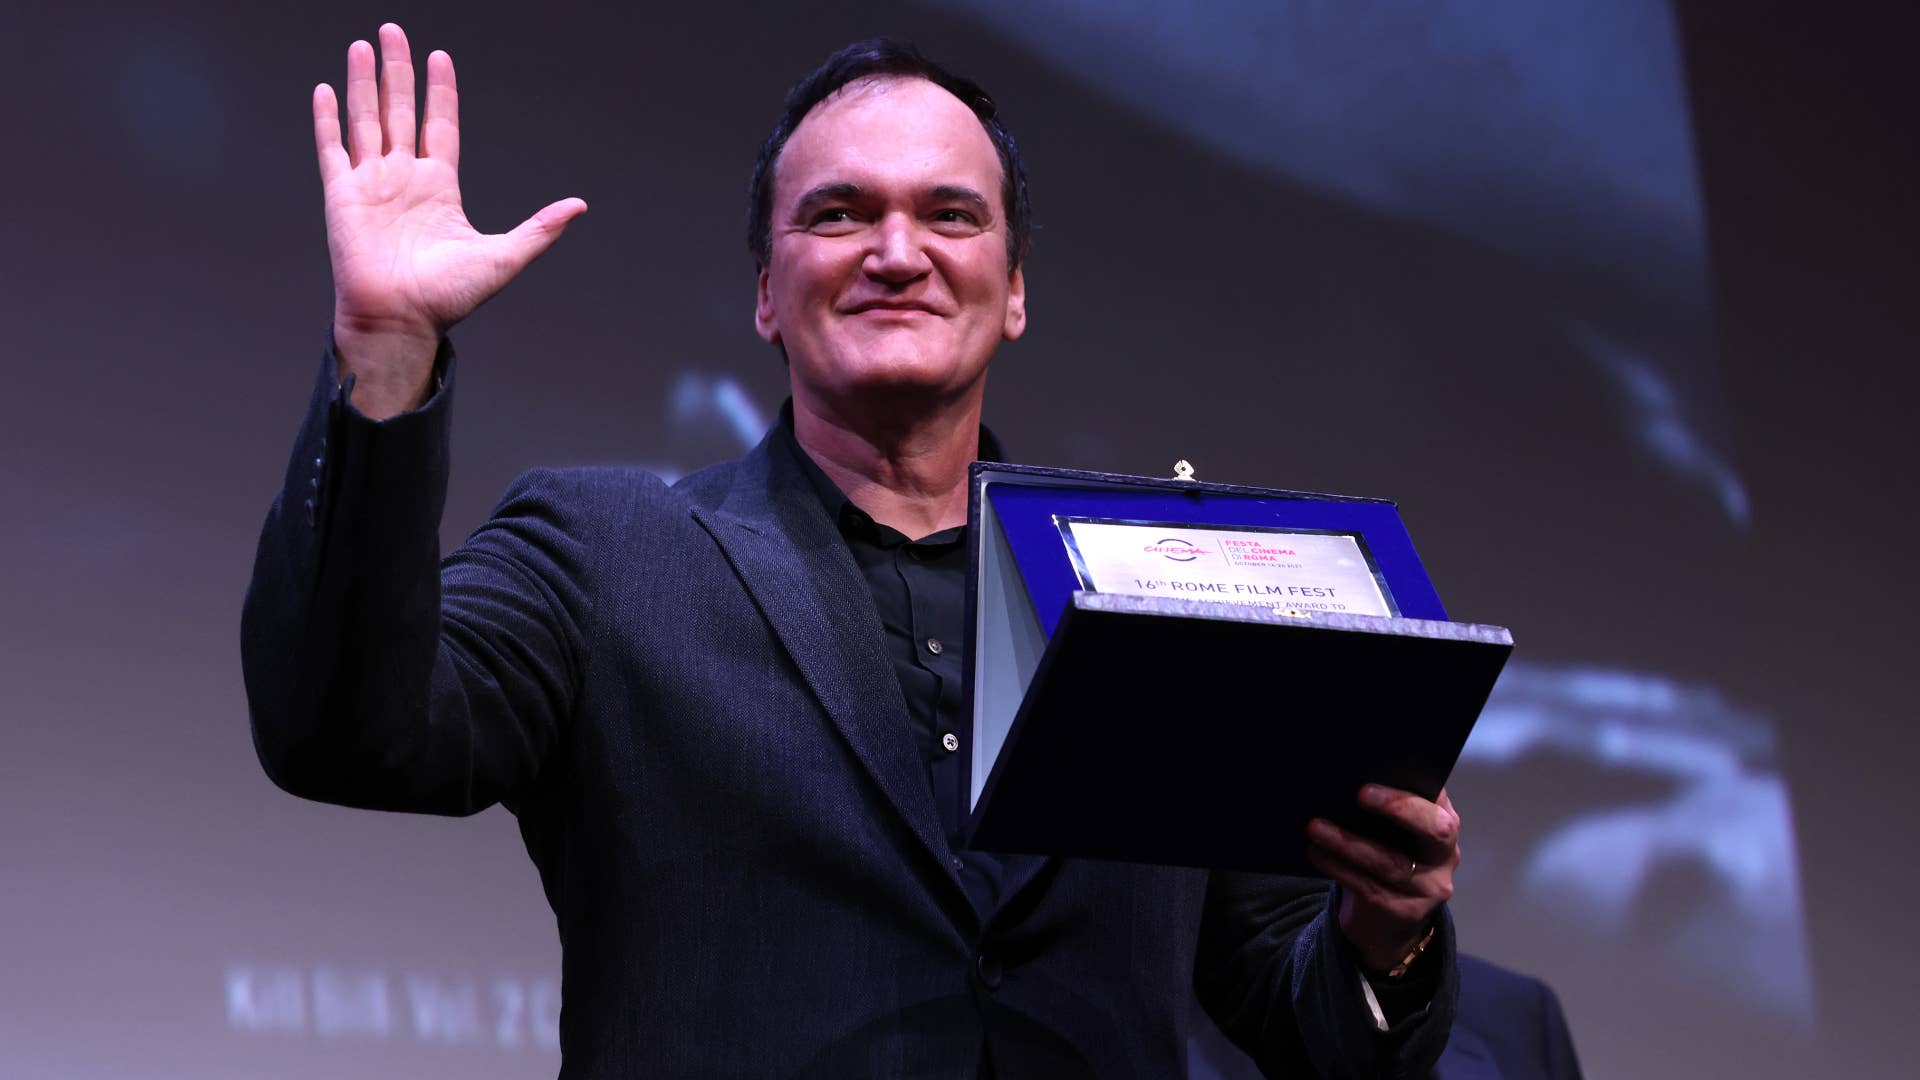 Quentin Tarantino appears at the Rome Film Festival